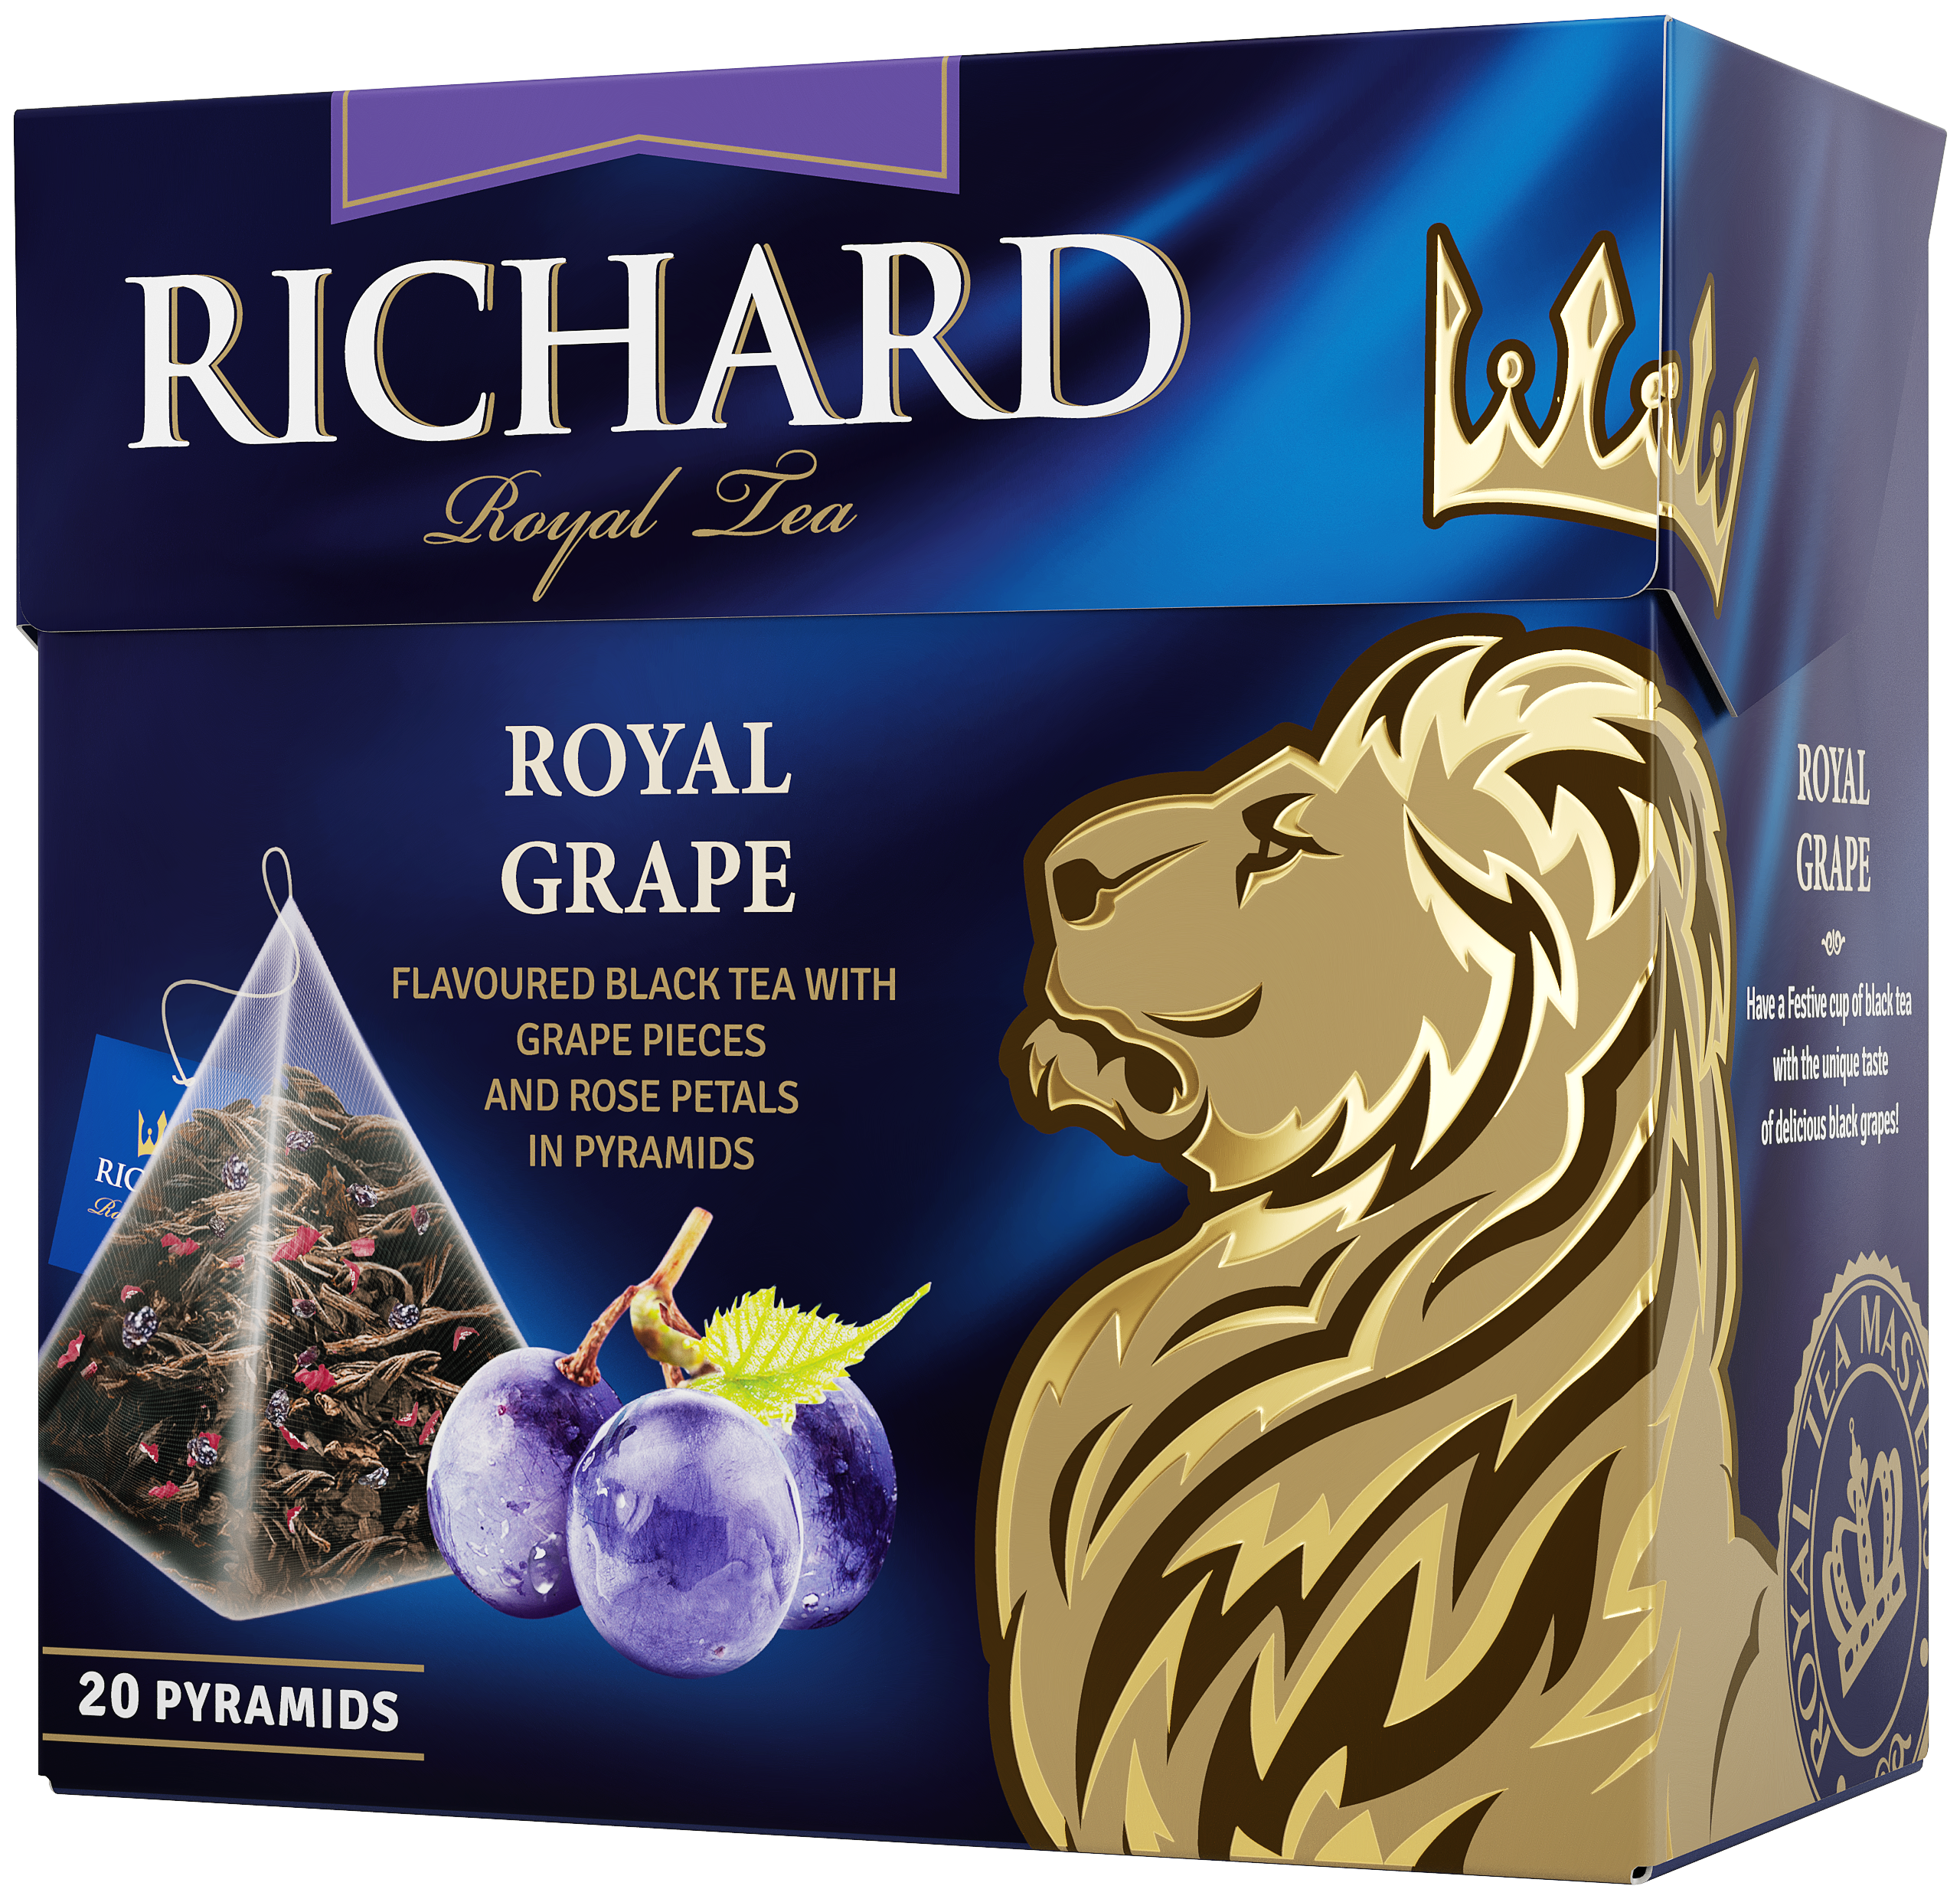 Richard "Royal Grape", black flavored large leaf tea, 20 pyramids